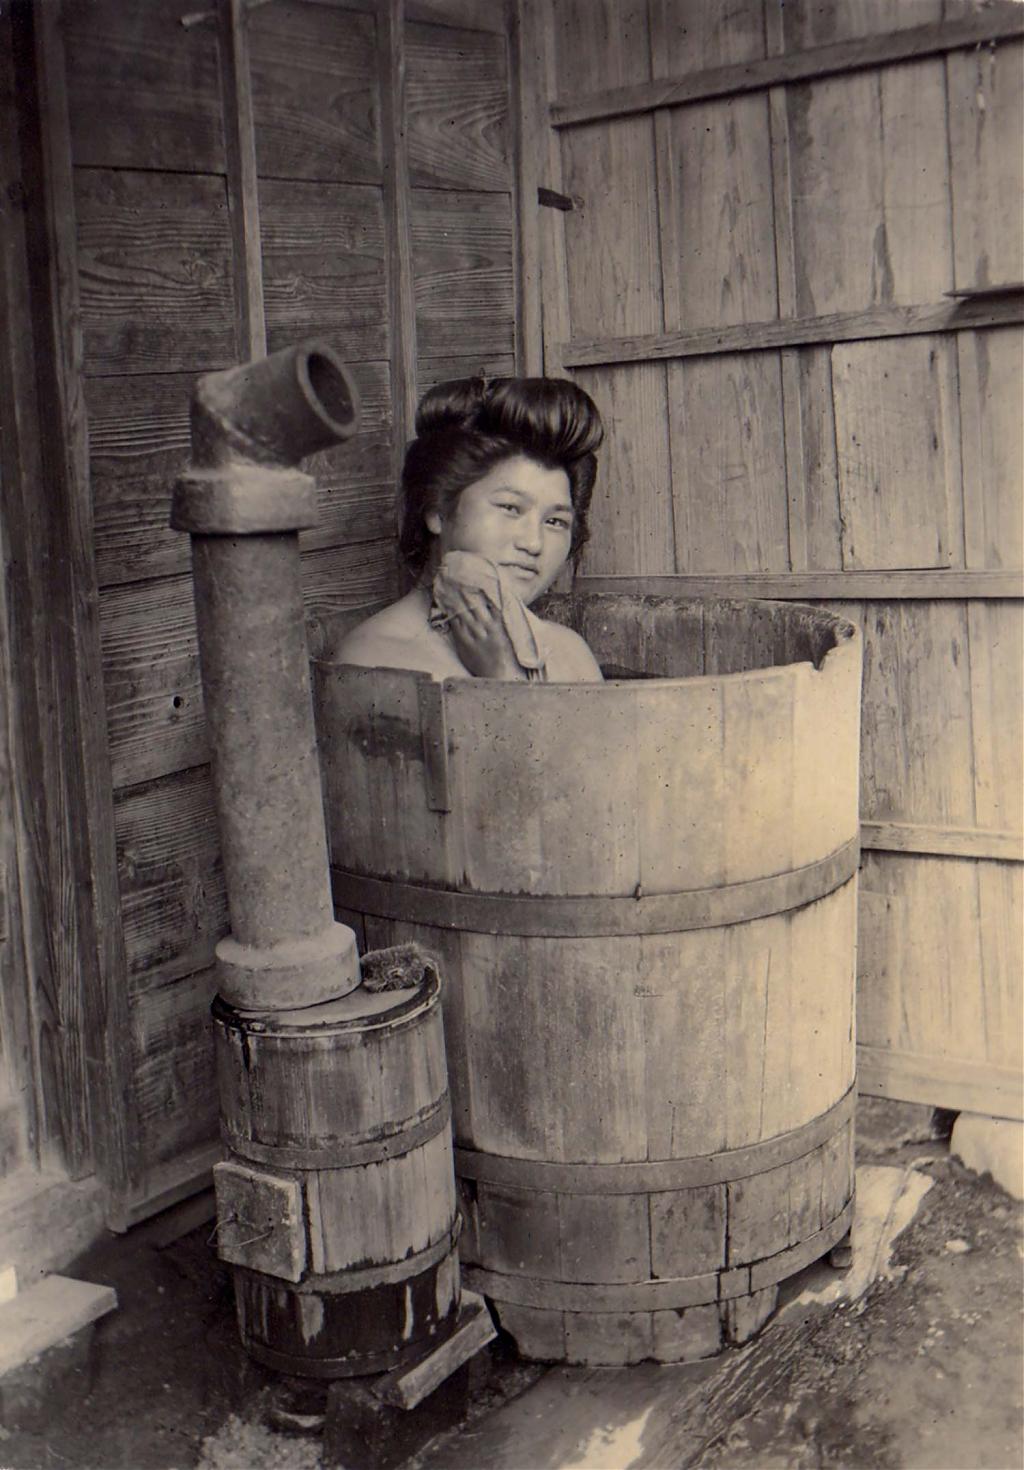 Japanese Woman in bath, 1900s